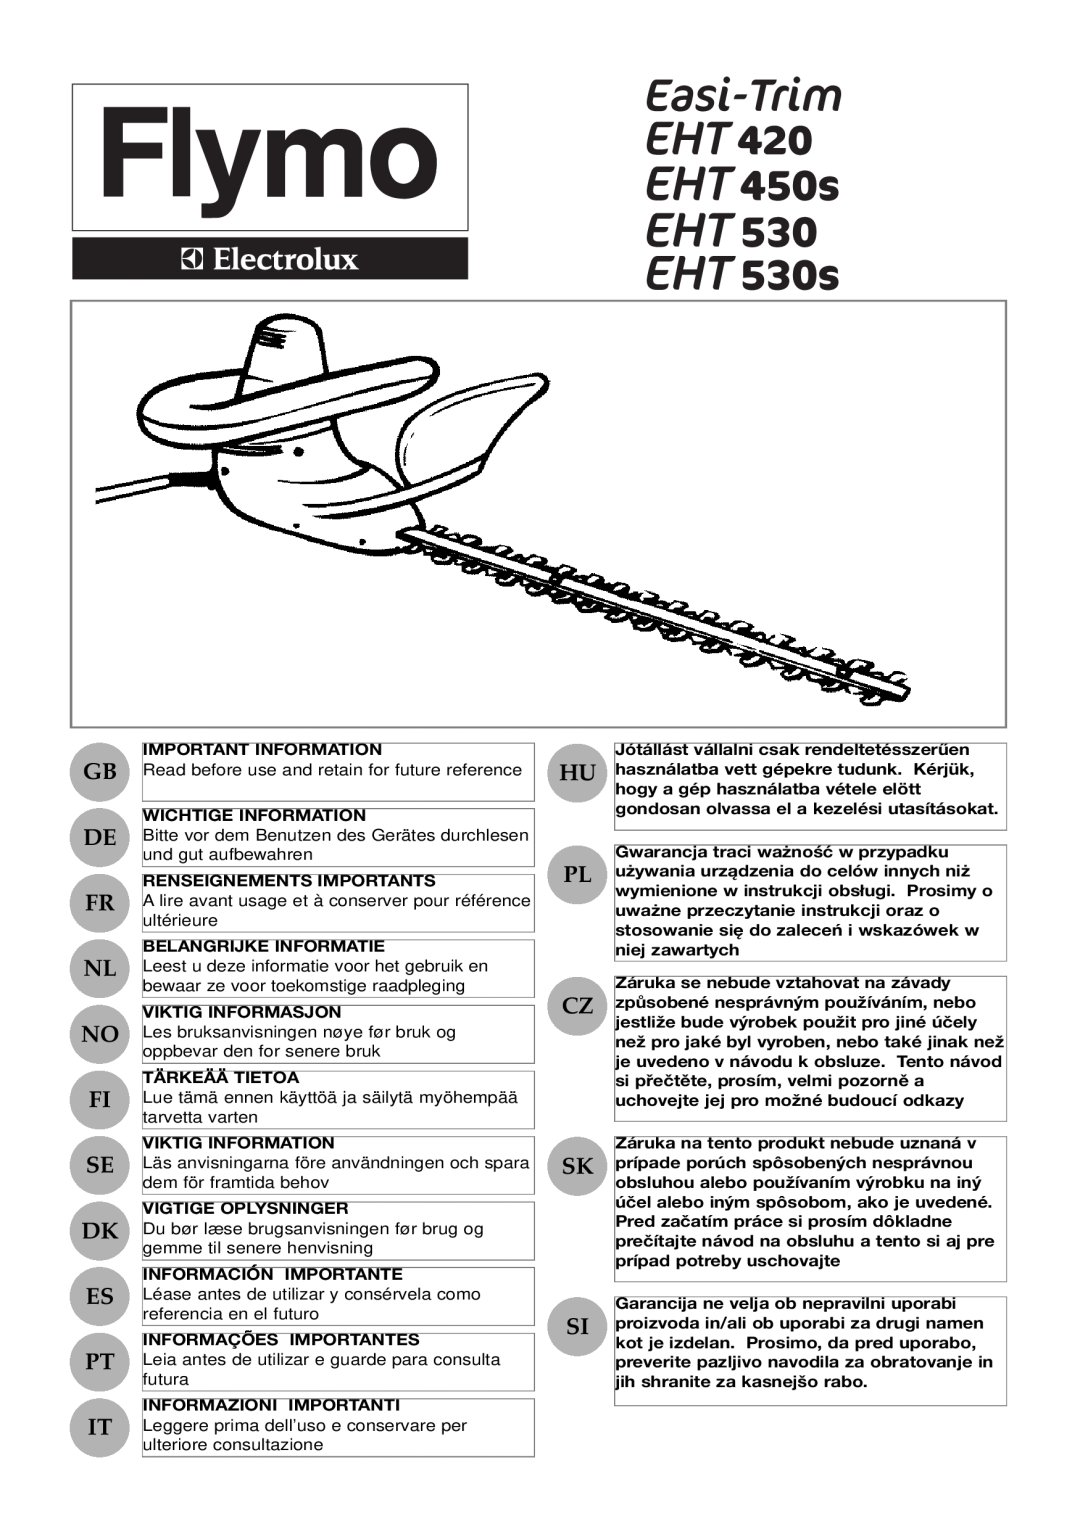 Flymo EHT 420, EHT 450s, EHT 530s manual Gb De Fr Nl No Fi Se Dk Es Pt It 